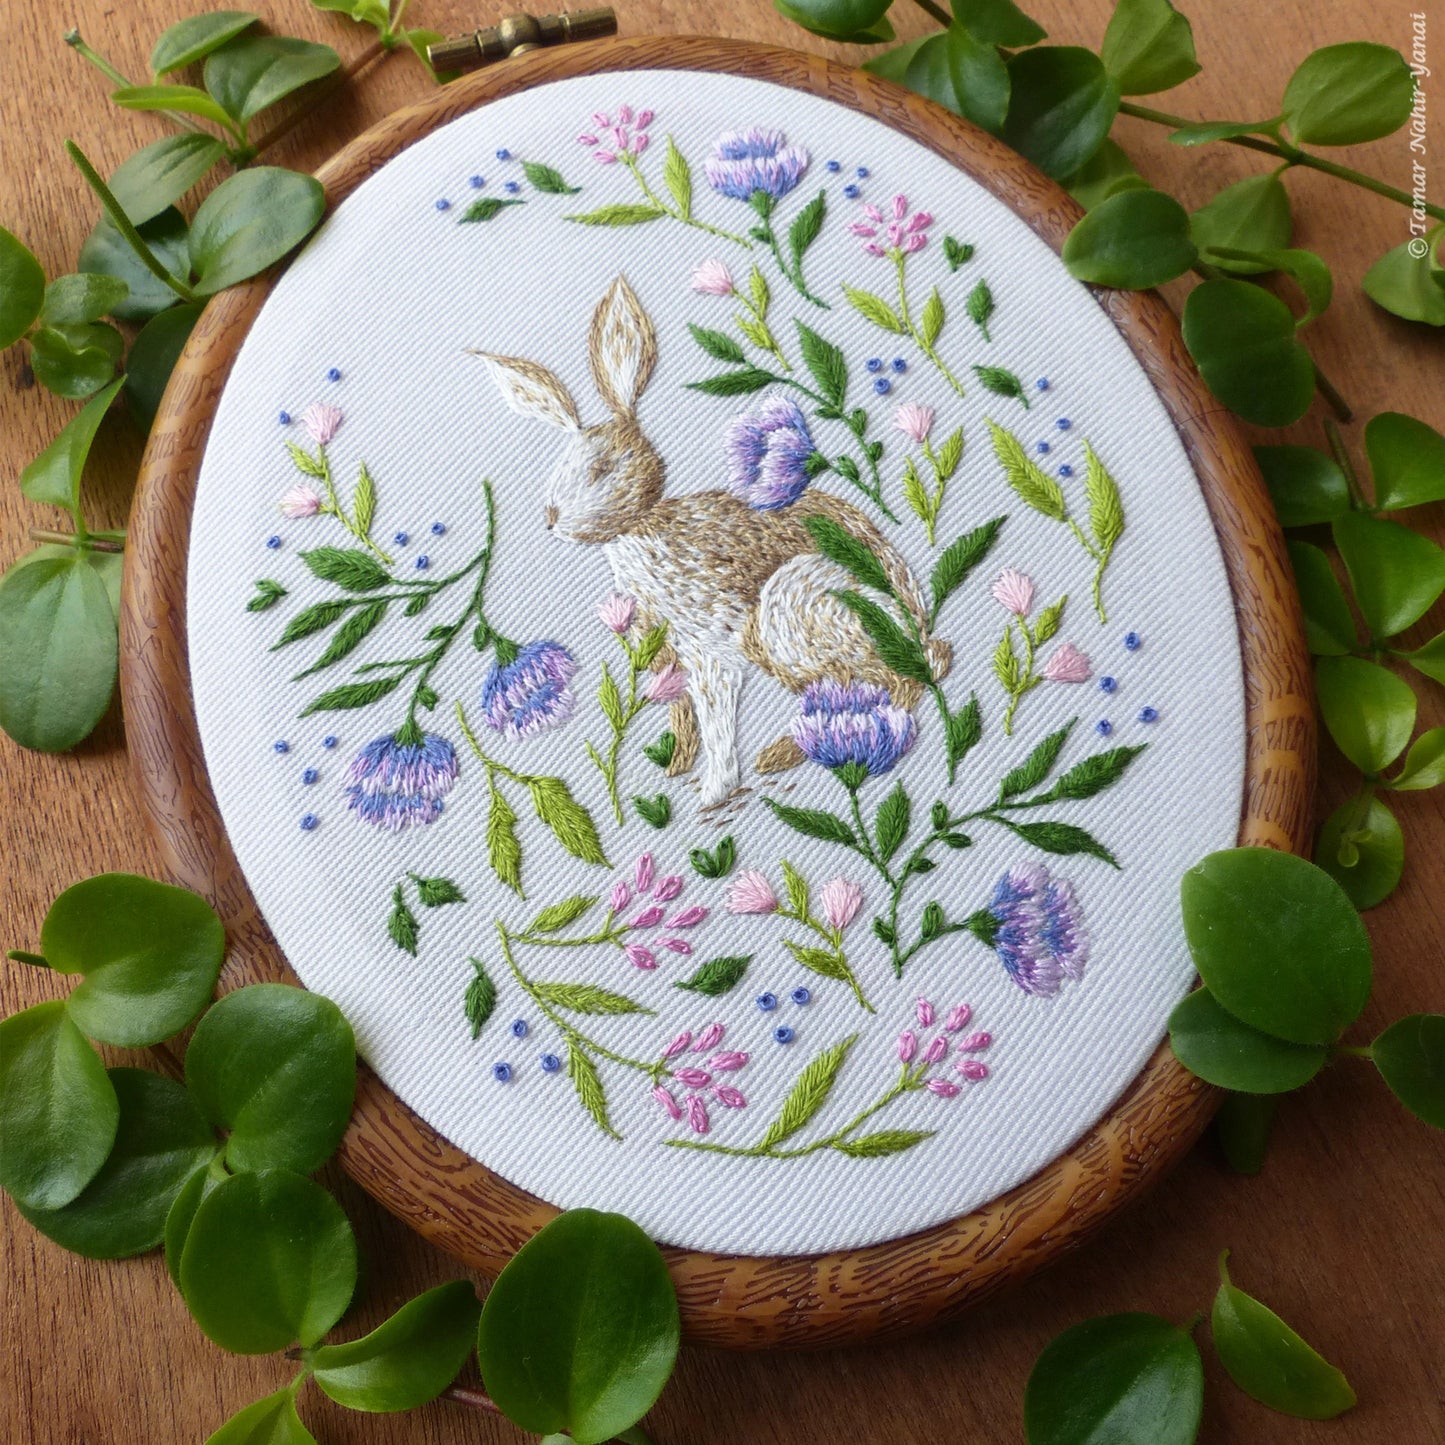 Garden Bunny embroidery kit